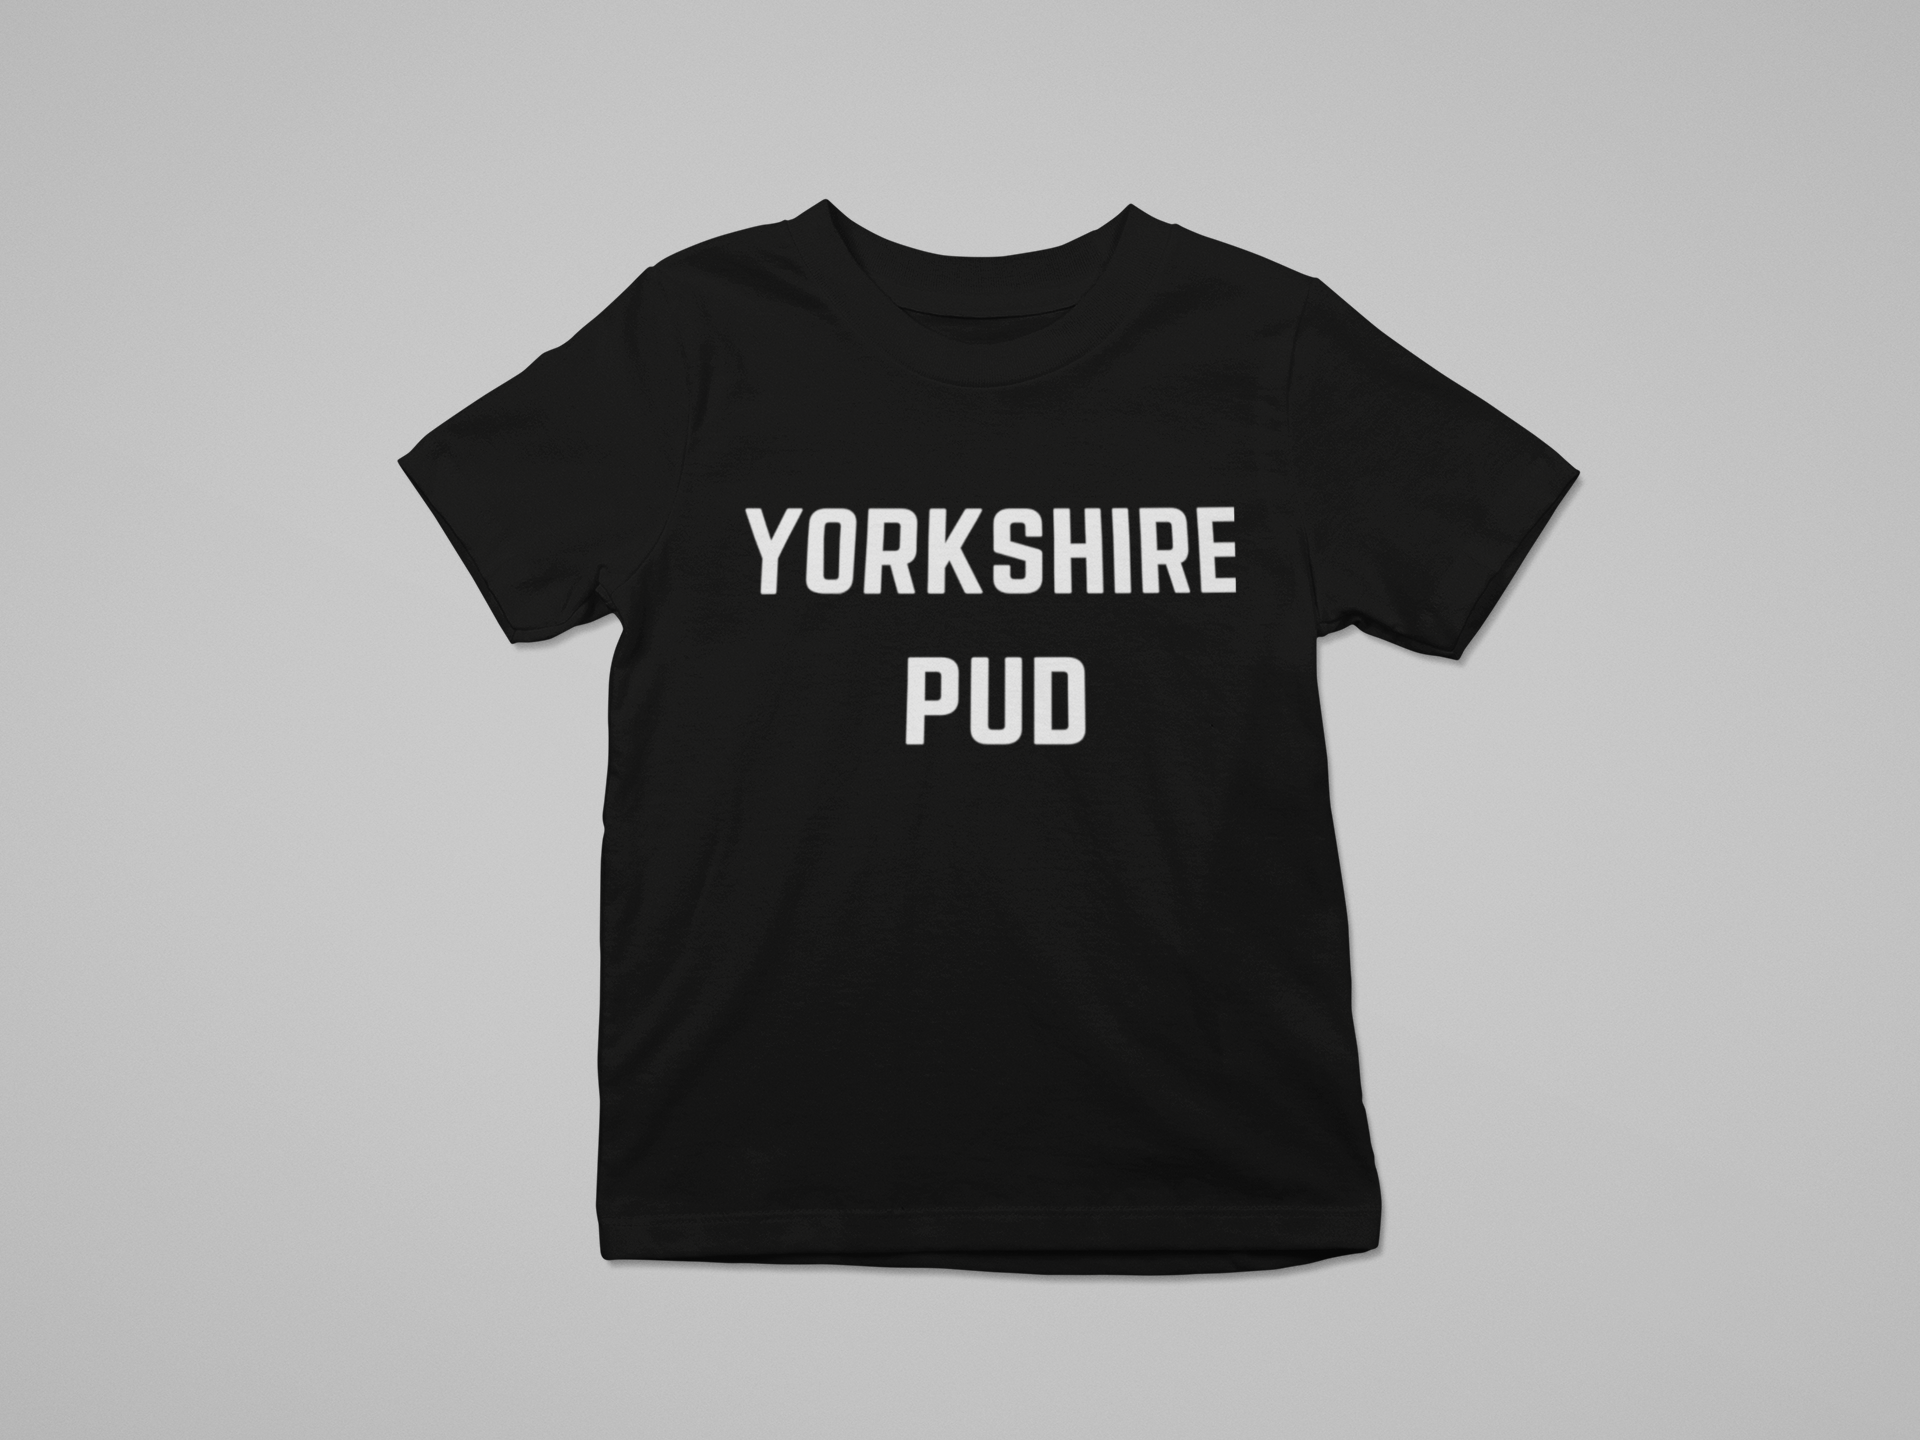 YORKSHIRE PUD Kids/Baby T-Shirt